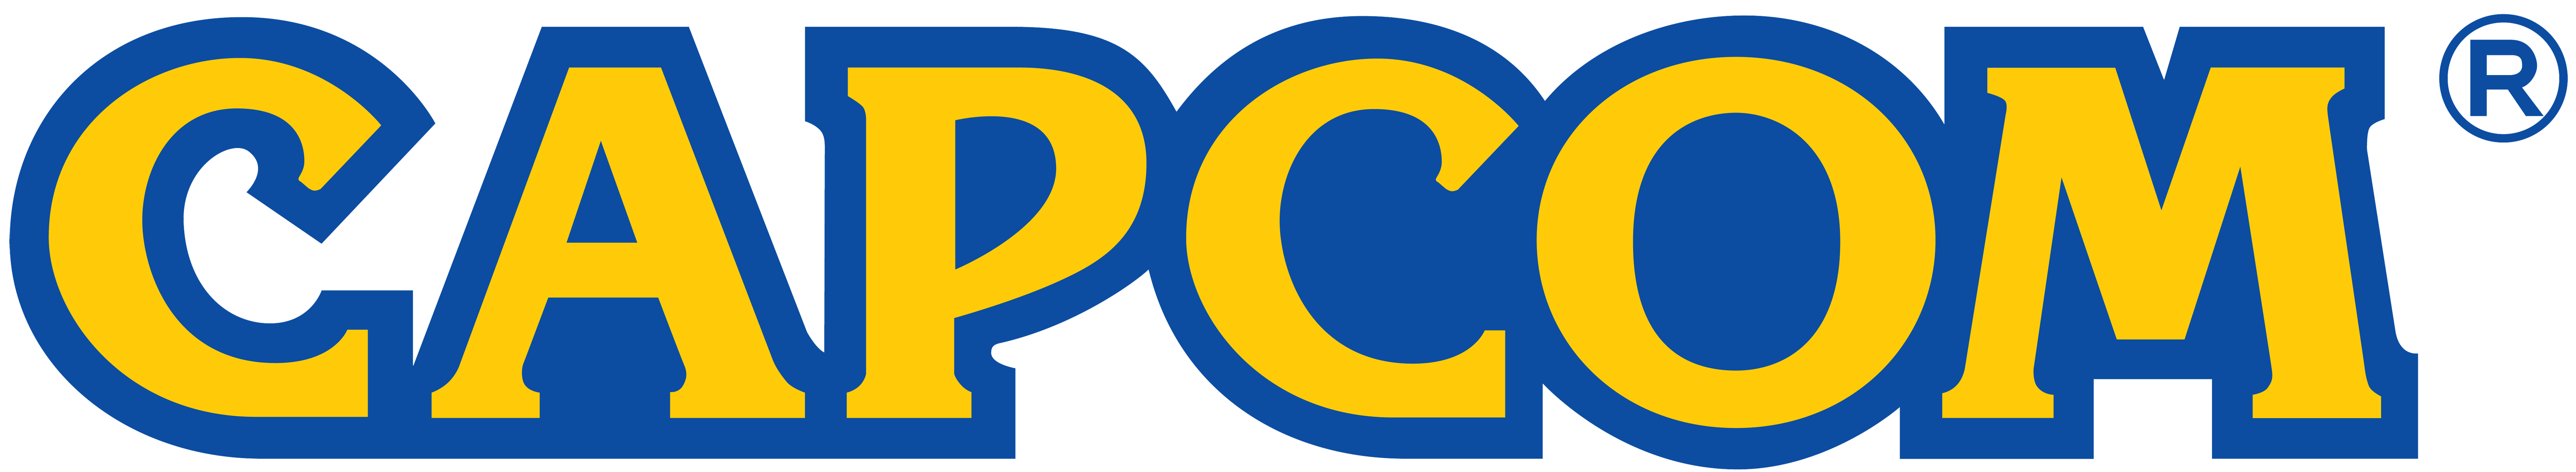 Capcom logo, logotype